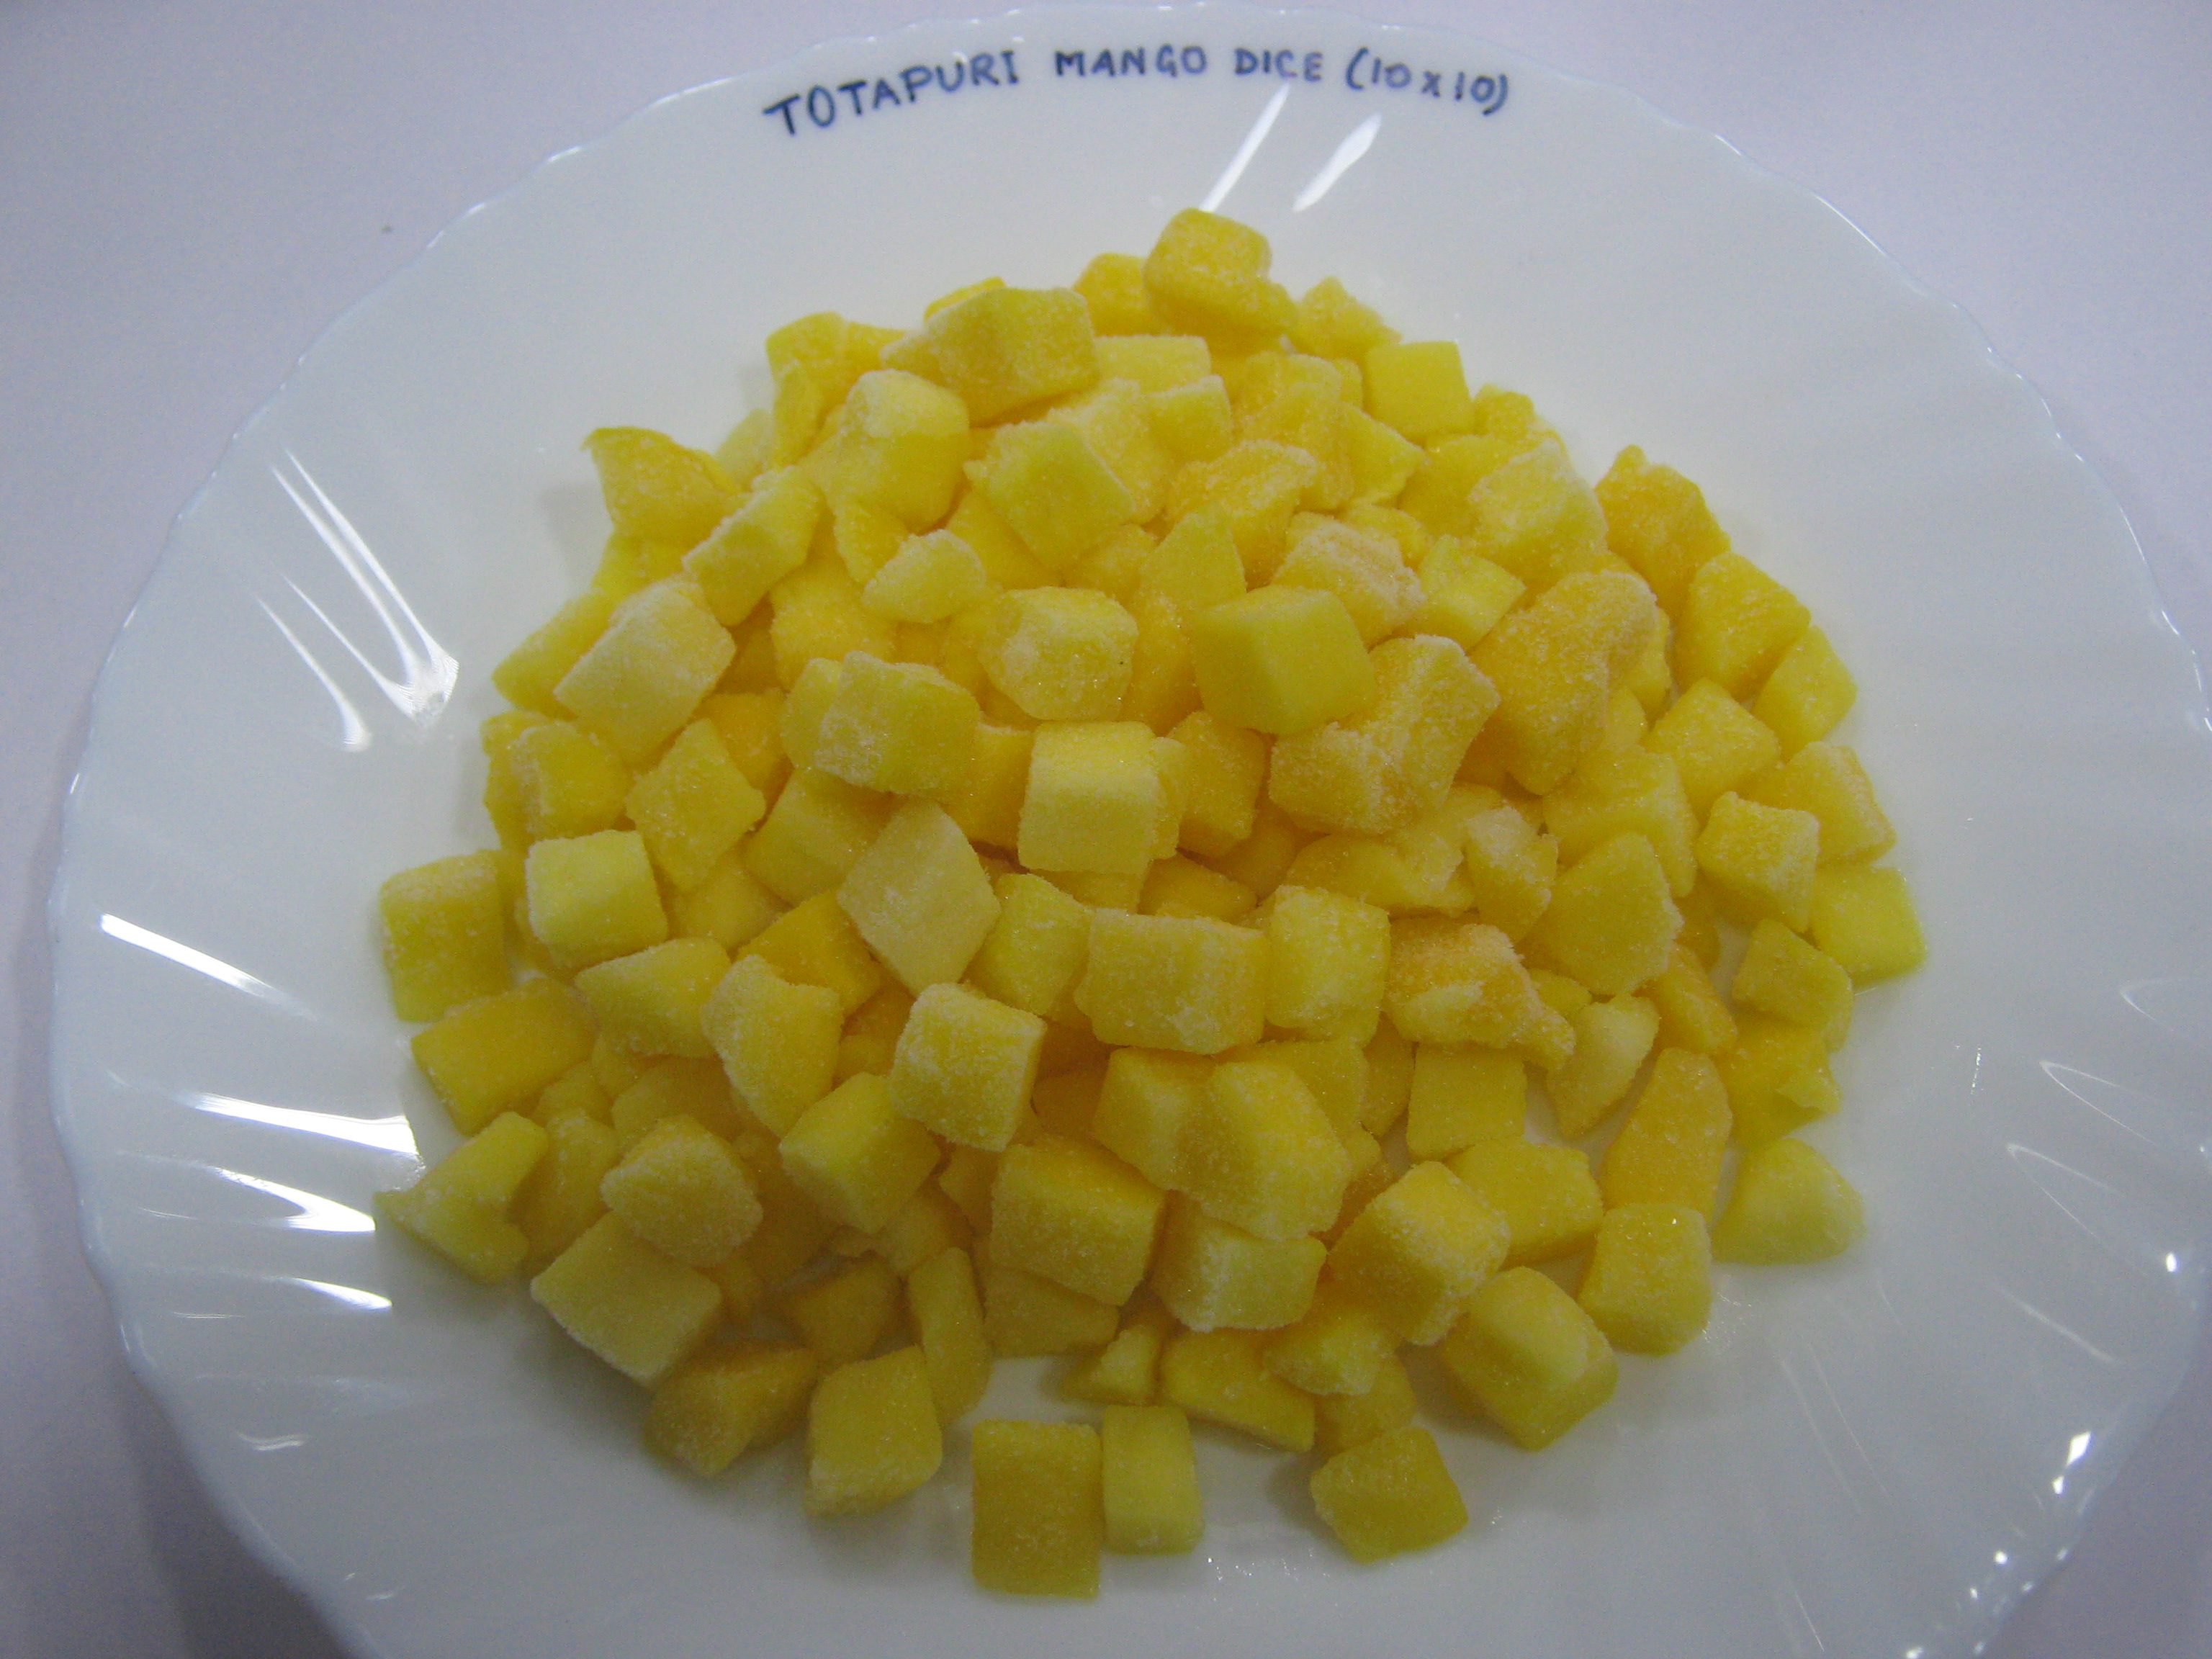 IQF Totapuri Mango Dices ( 10x10 mm)